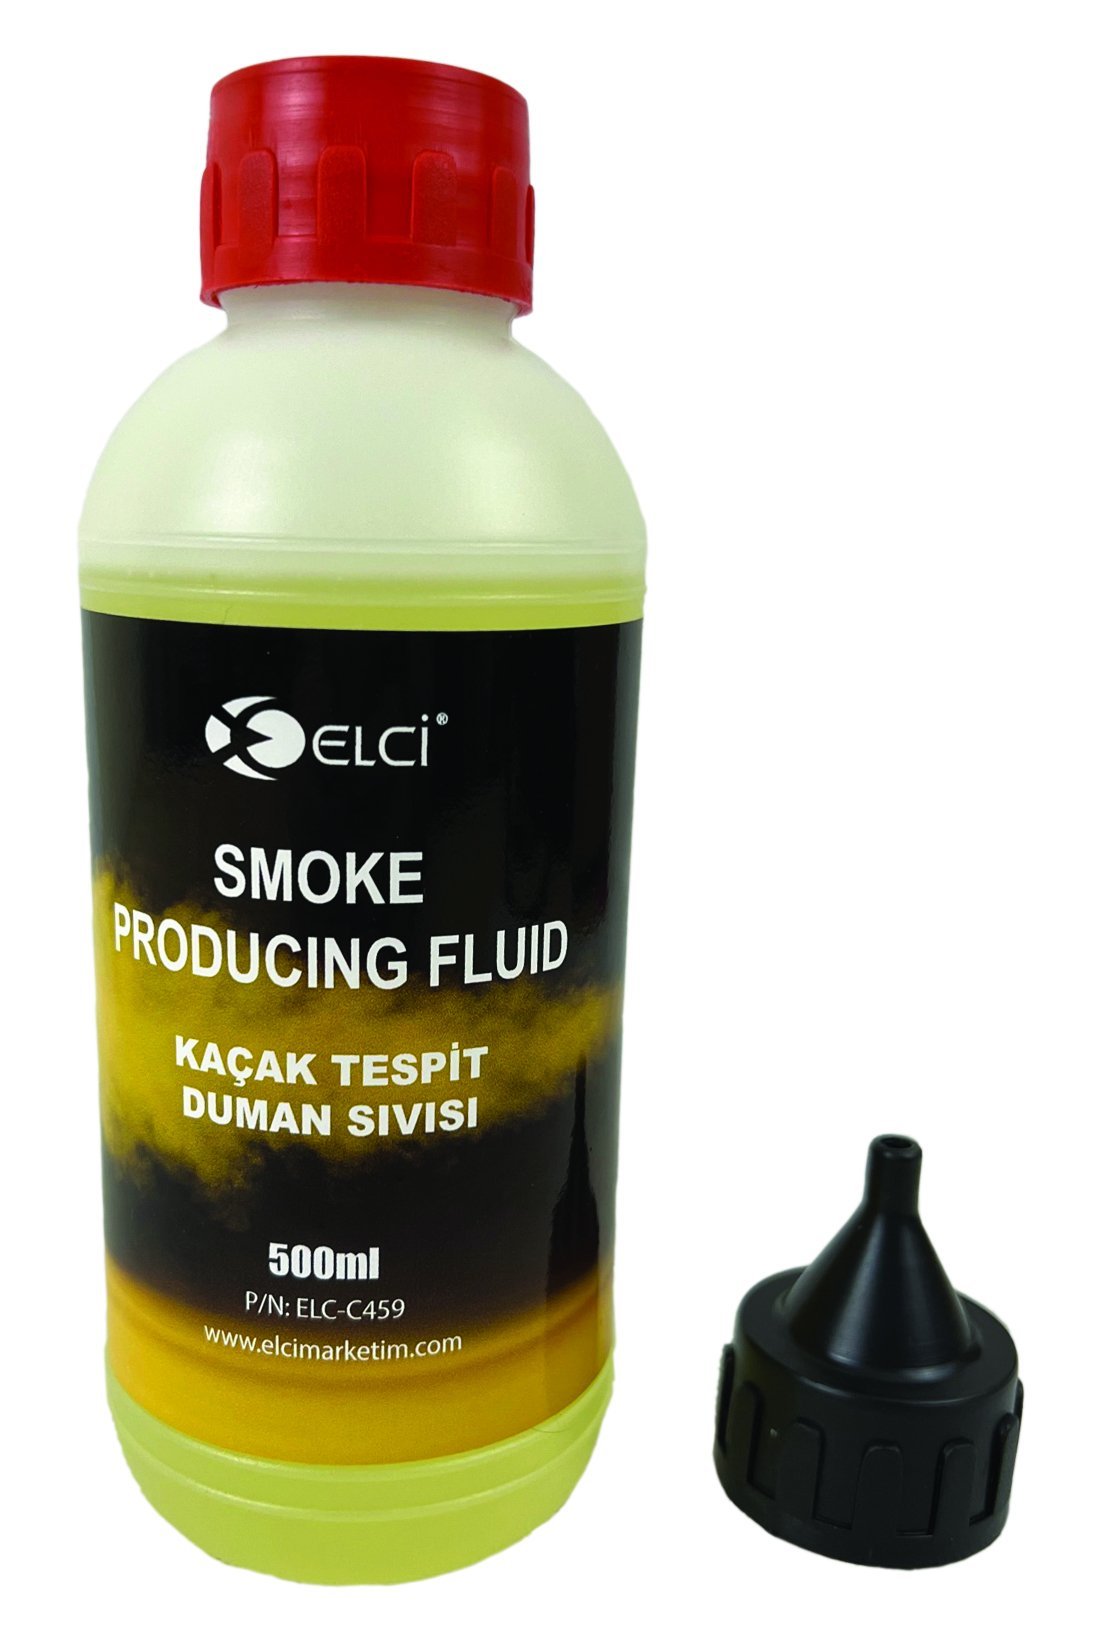 DUMAN EFEKT SIVISI / SMOKE PRODUCING FLUID (Kaçak Tespit Duman Sıvısı) 500ml.